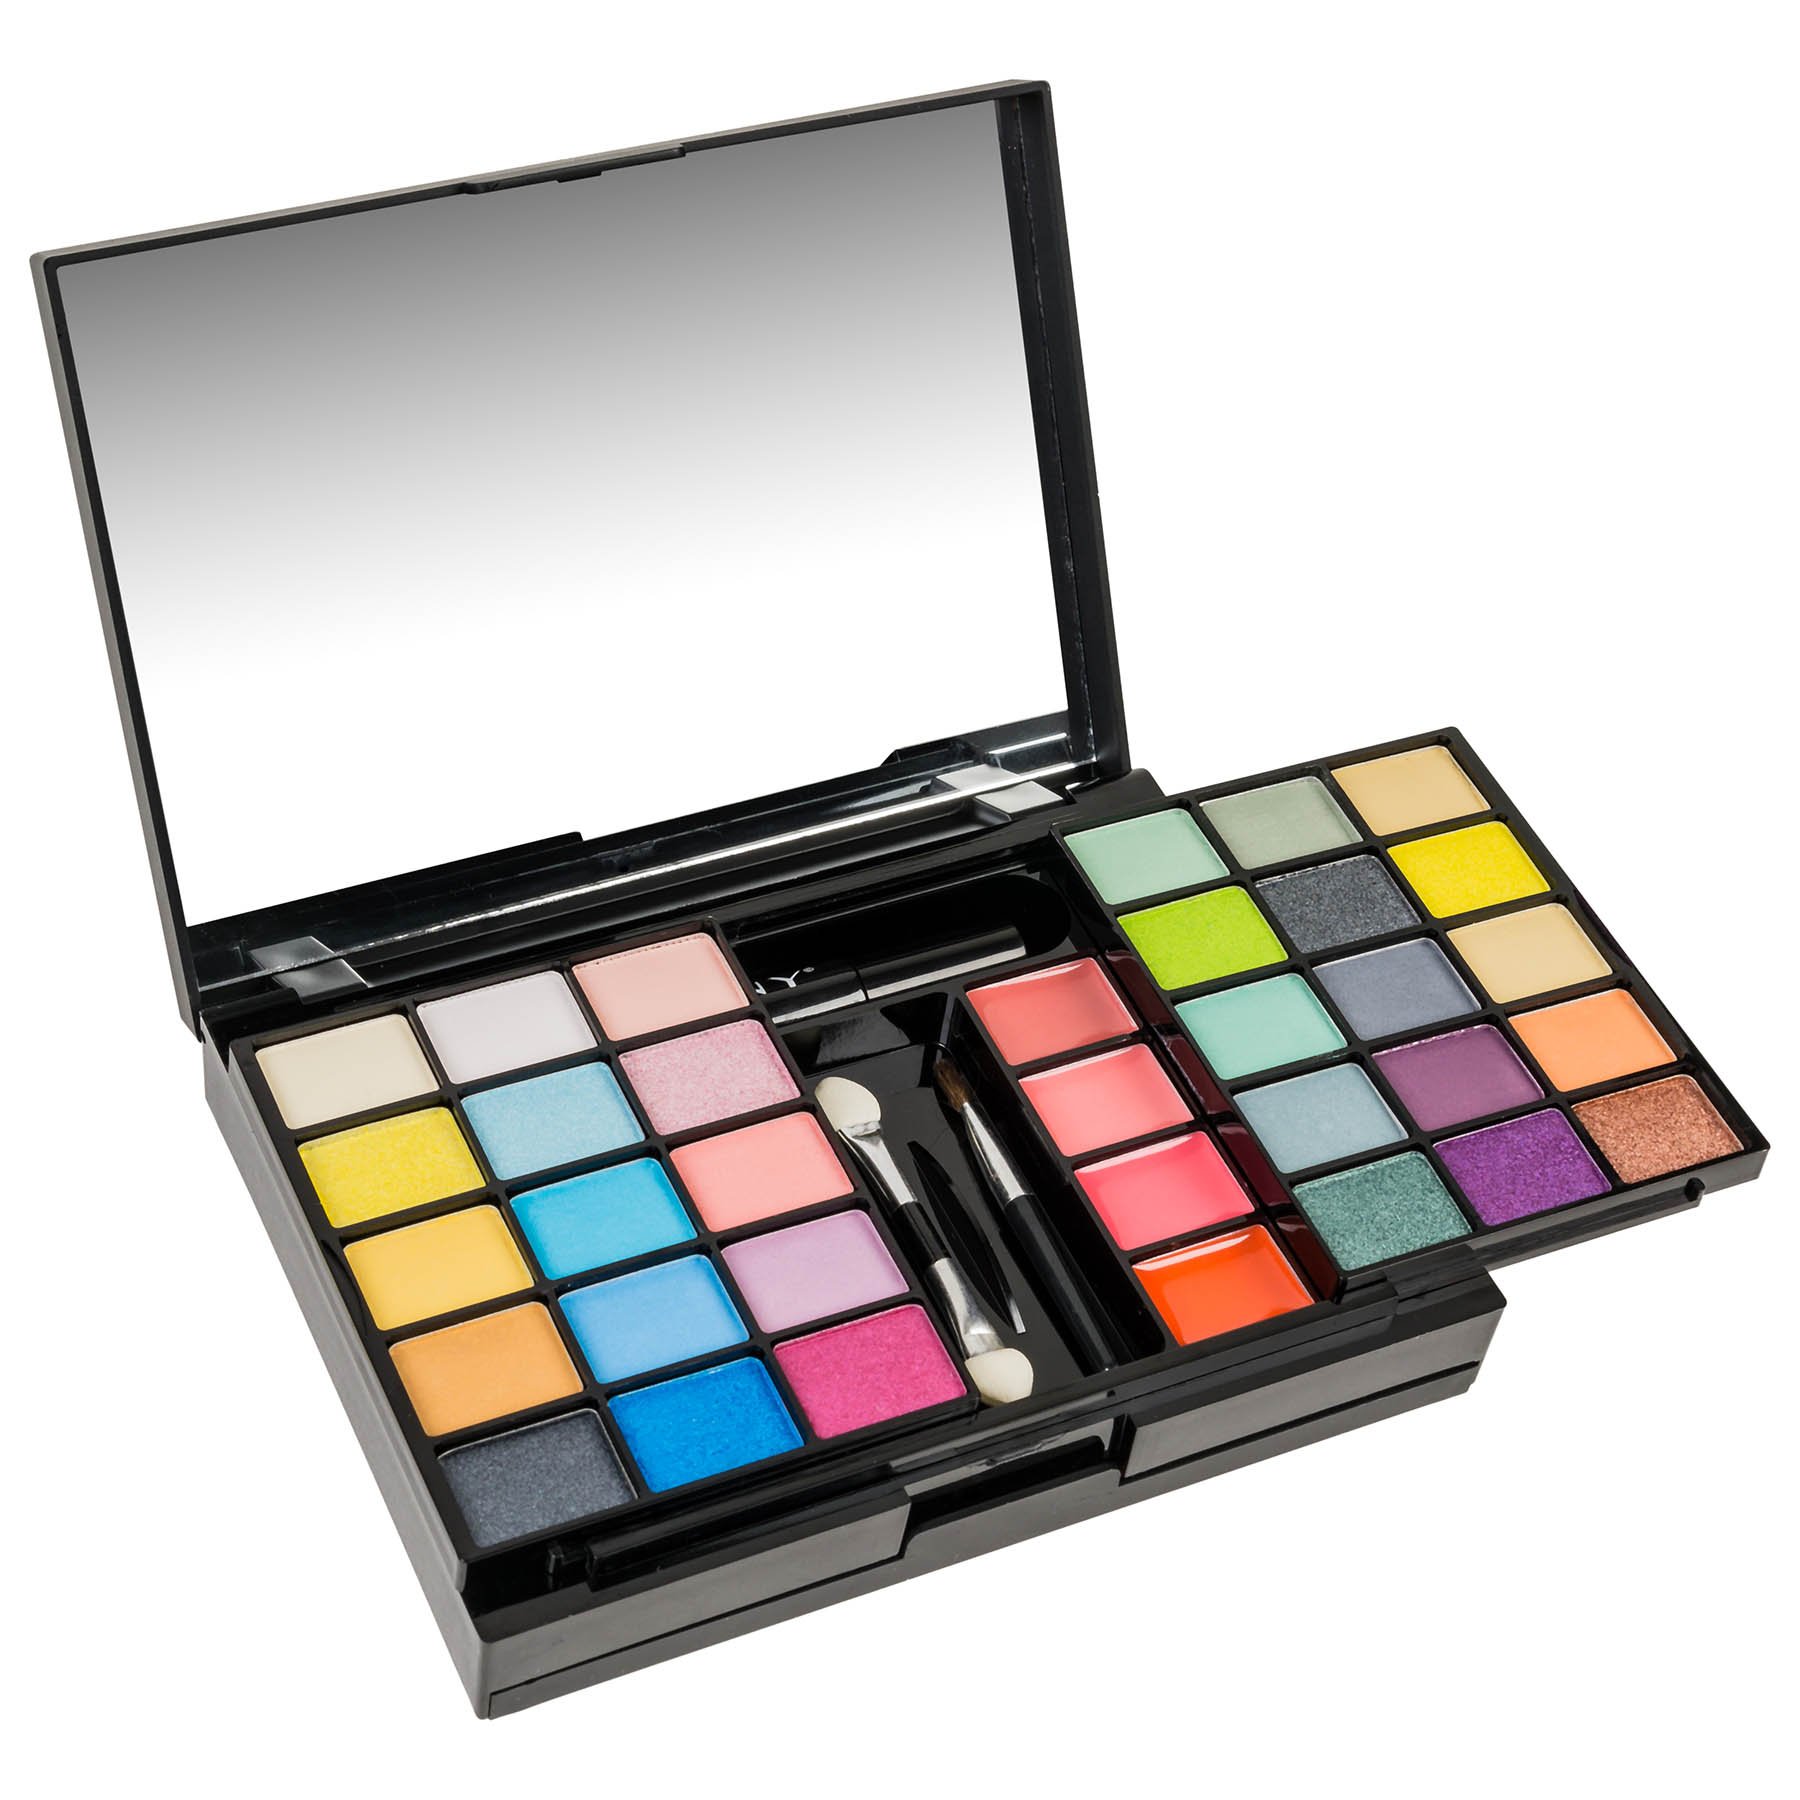 SHANY 'Fix Me Up' Makeup Kit - Eye Shadows, Lip Colors, Blushes, and Applicators